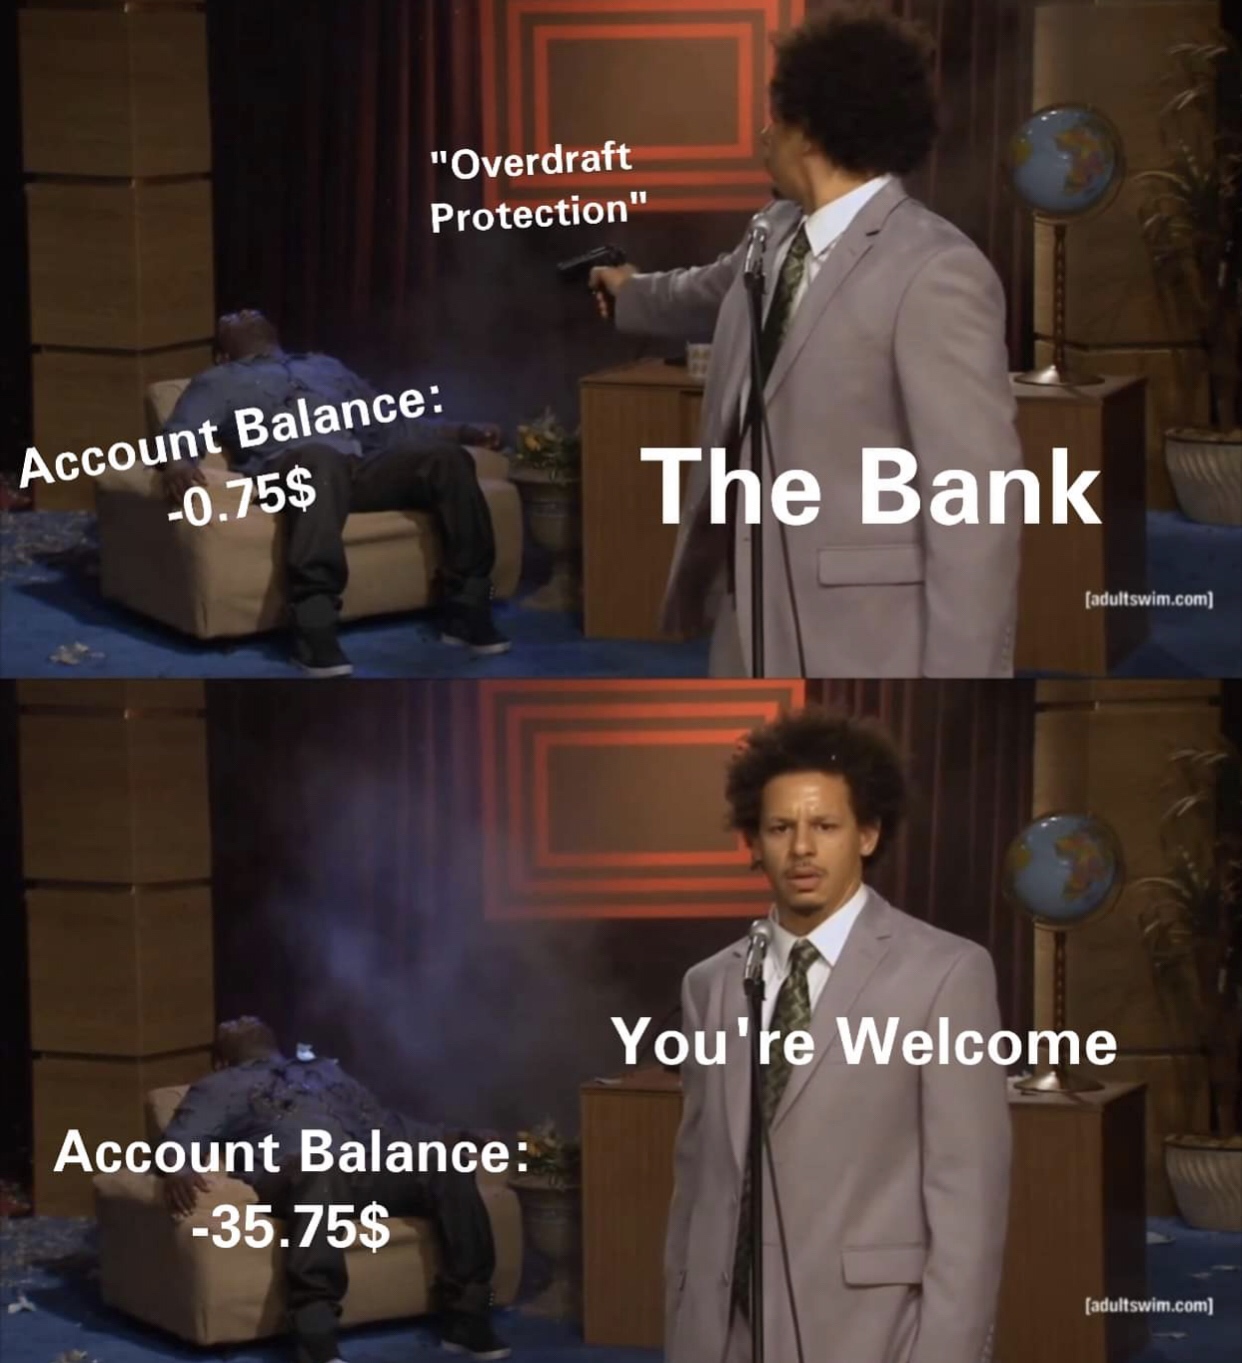 pakistan memes - "Overdraft Protection" Account Balance 0.75$ The Bank adultswim.com You're Welcome Account Balance 35.75$ adultswim.com